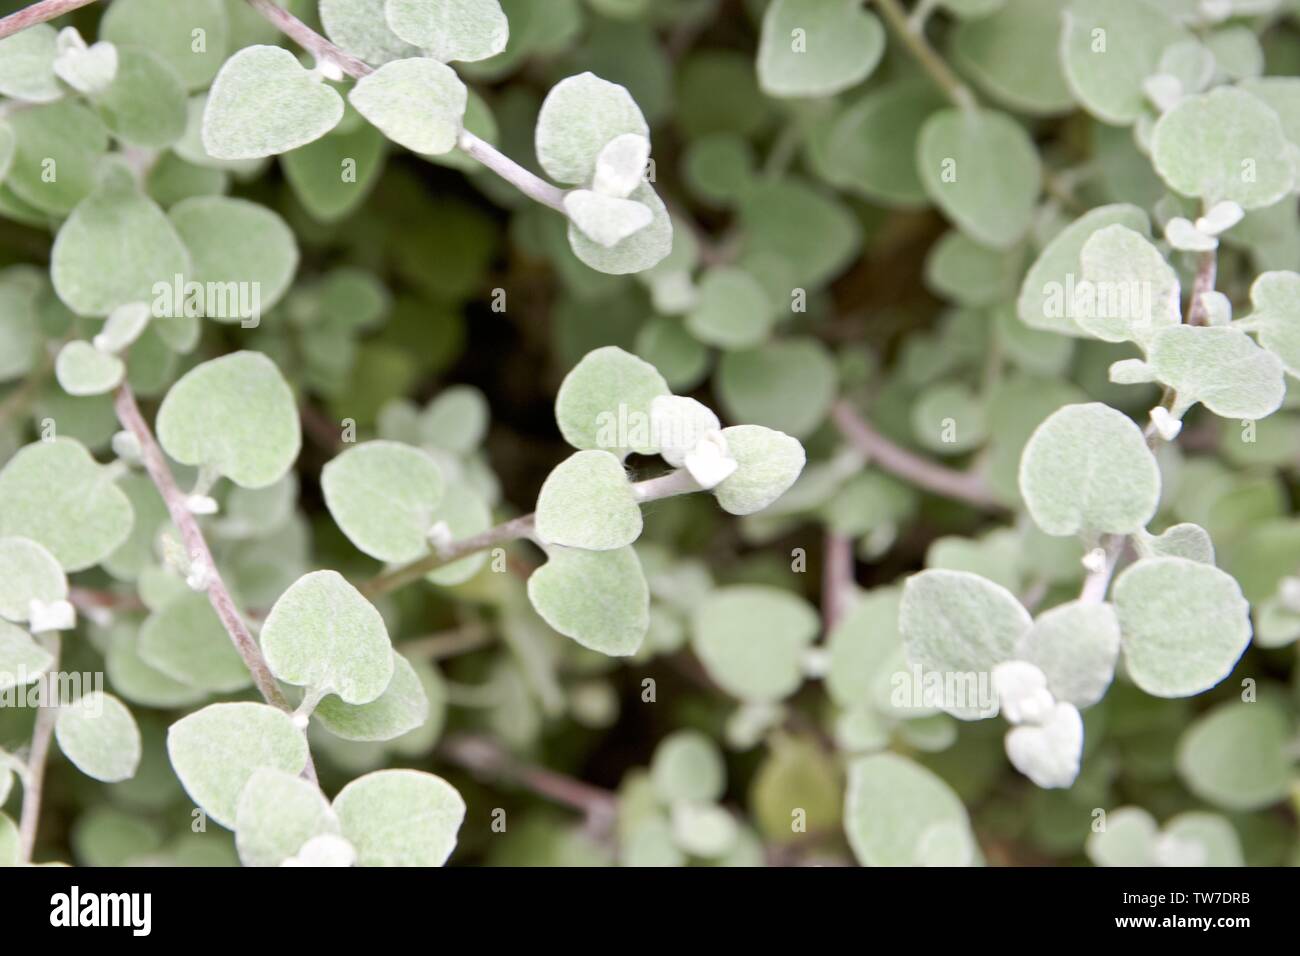 Helichrysum petiolare or white licorice plant Stock Photo